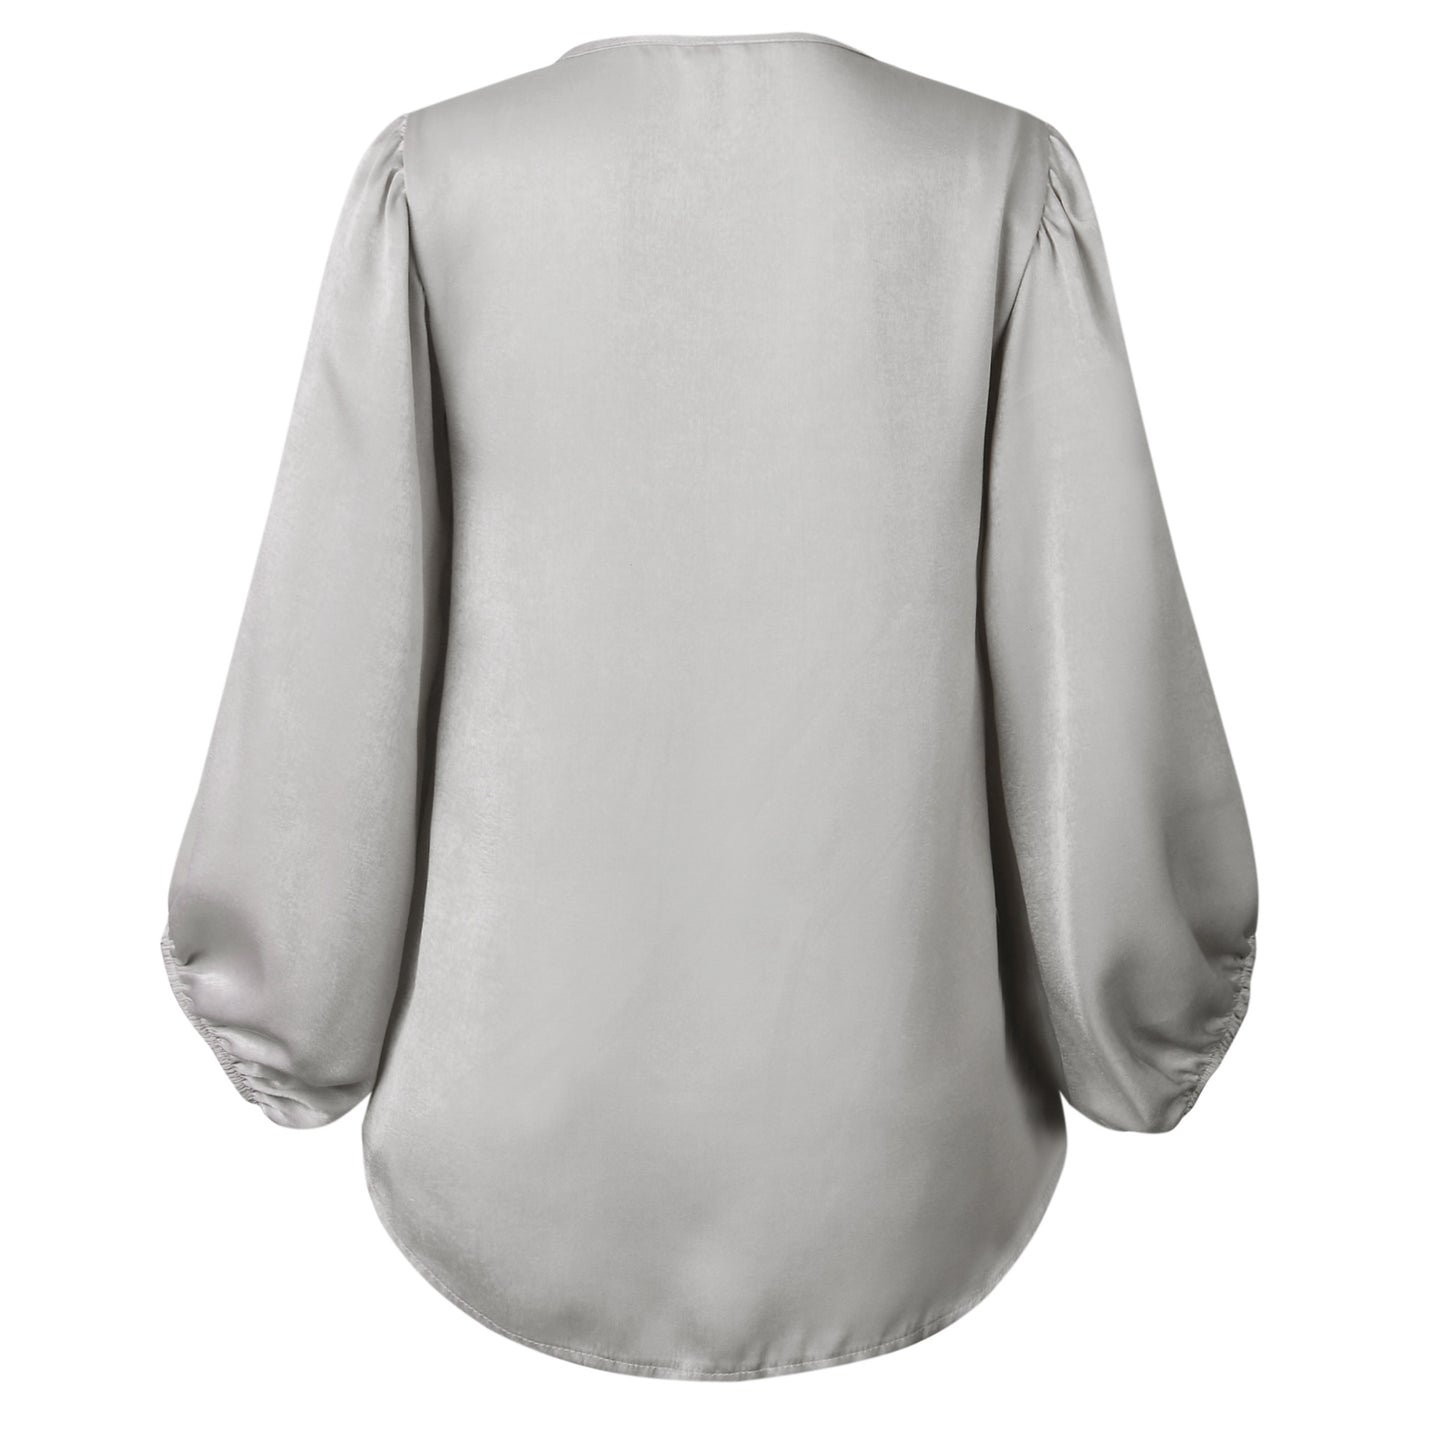 Casual V-neck long sleeve blouse